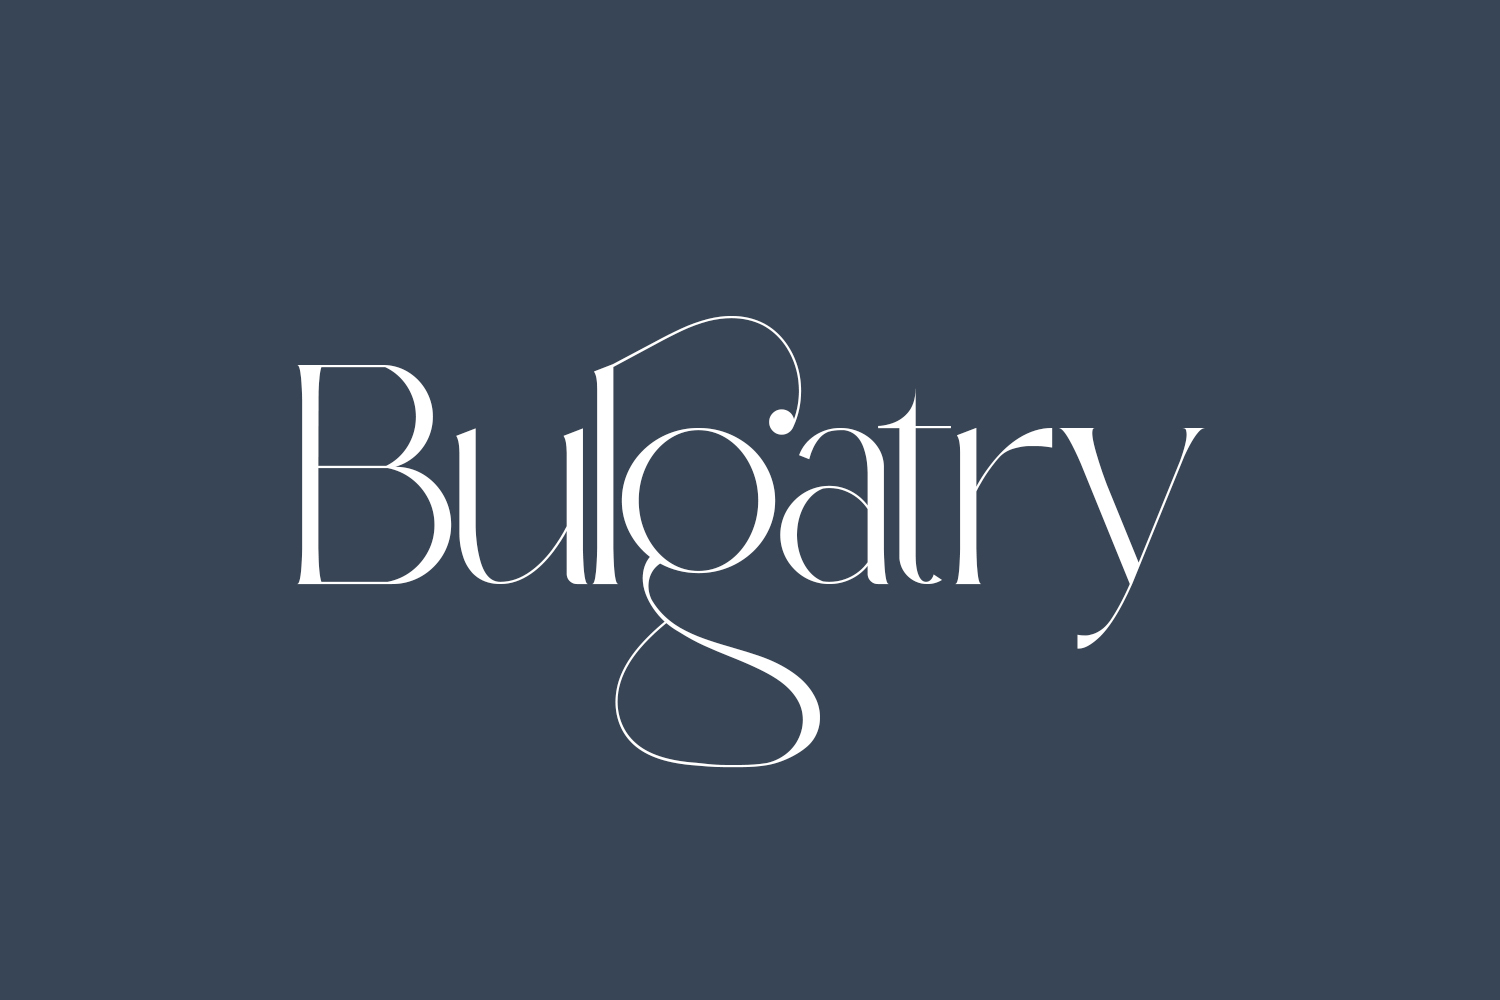 Bulgatry Free Font